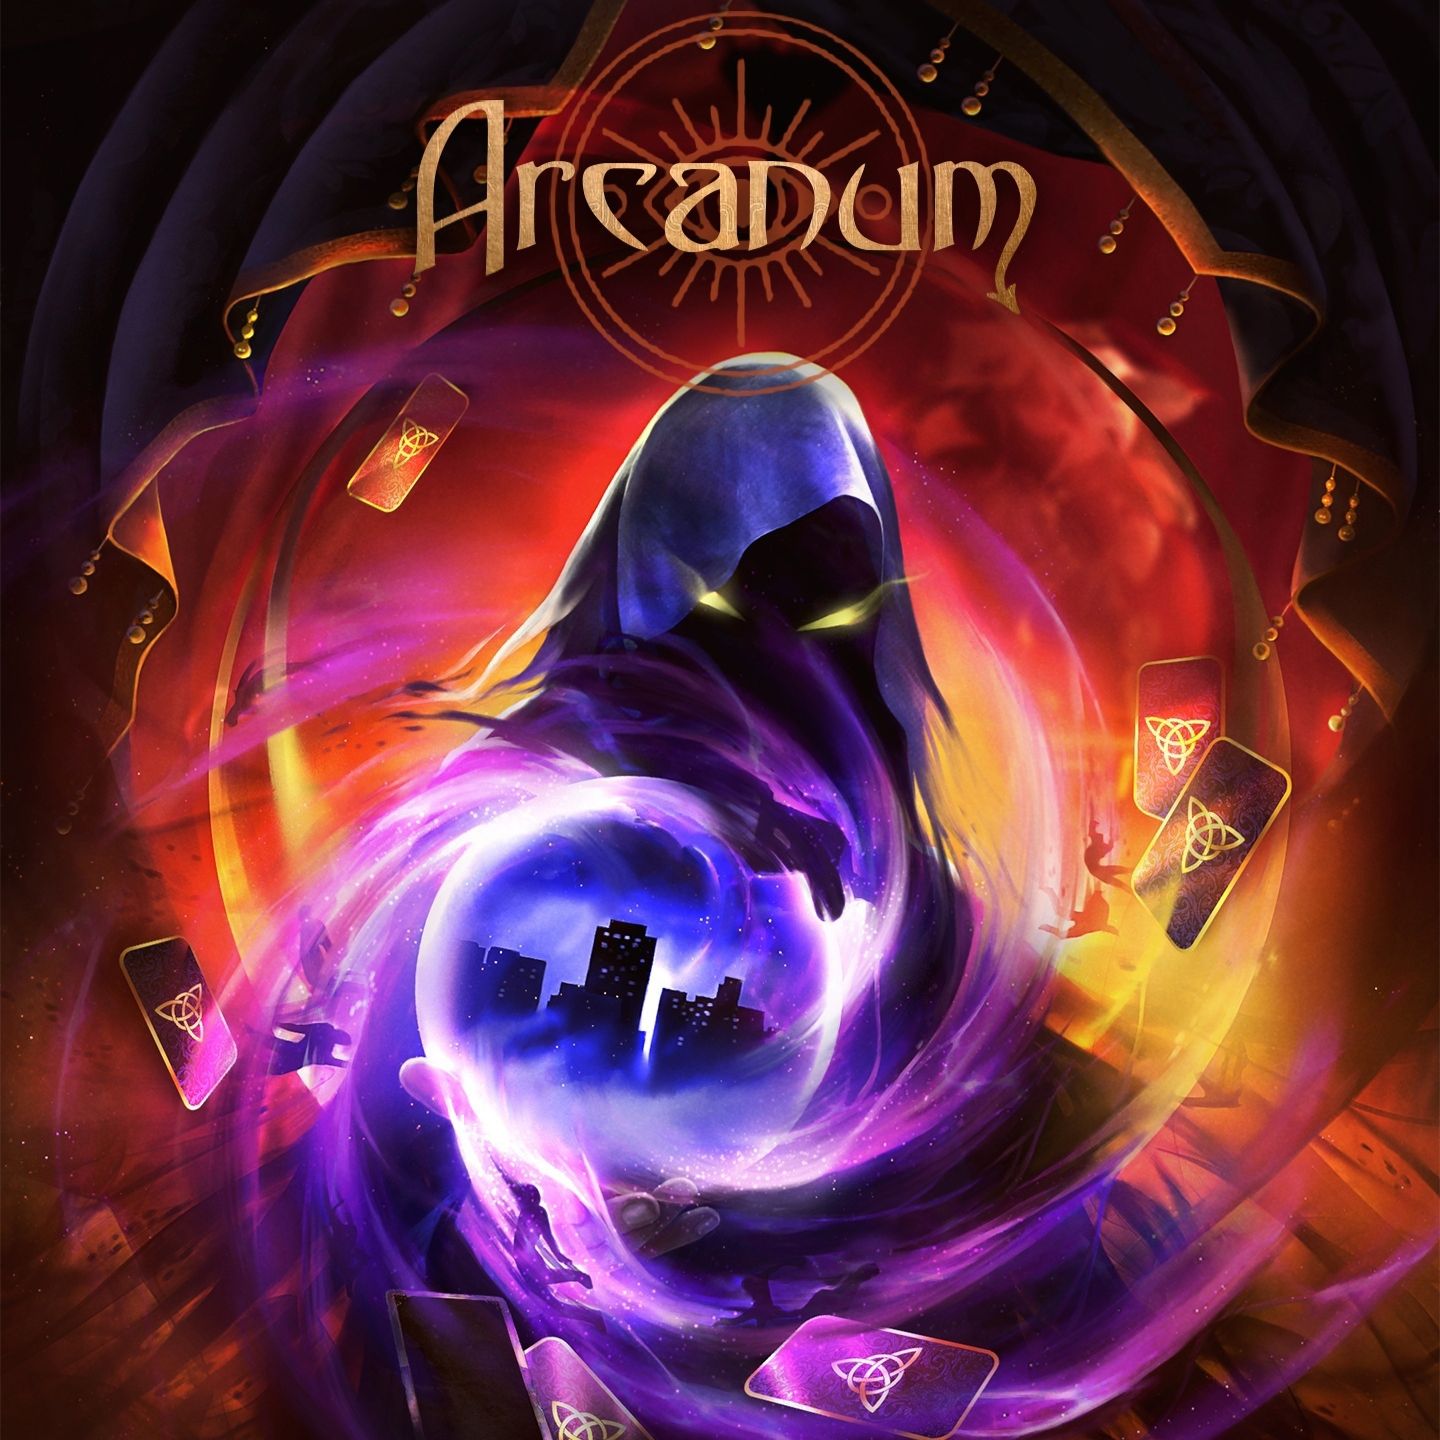 डाउनलोड करा Your Story Interactive - Arcanum - Normal Base